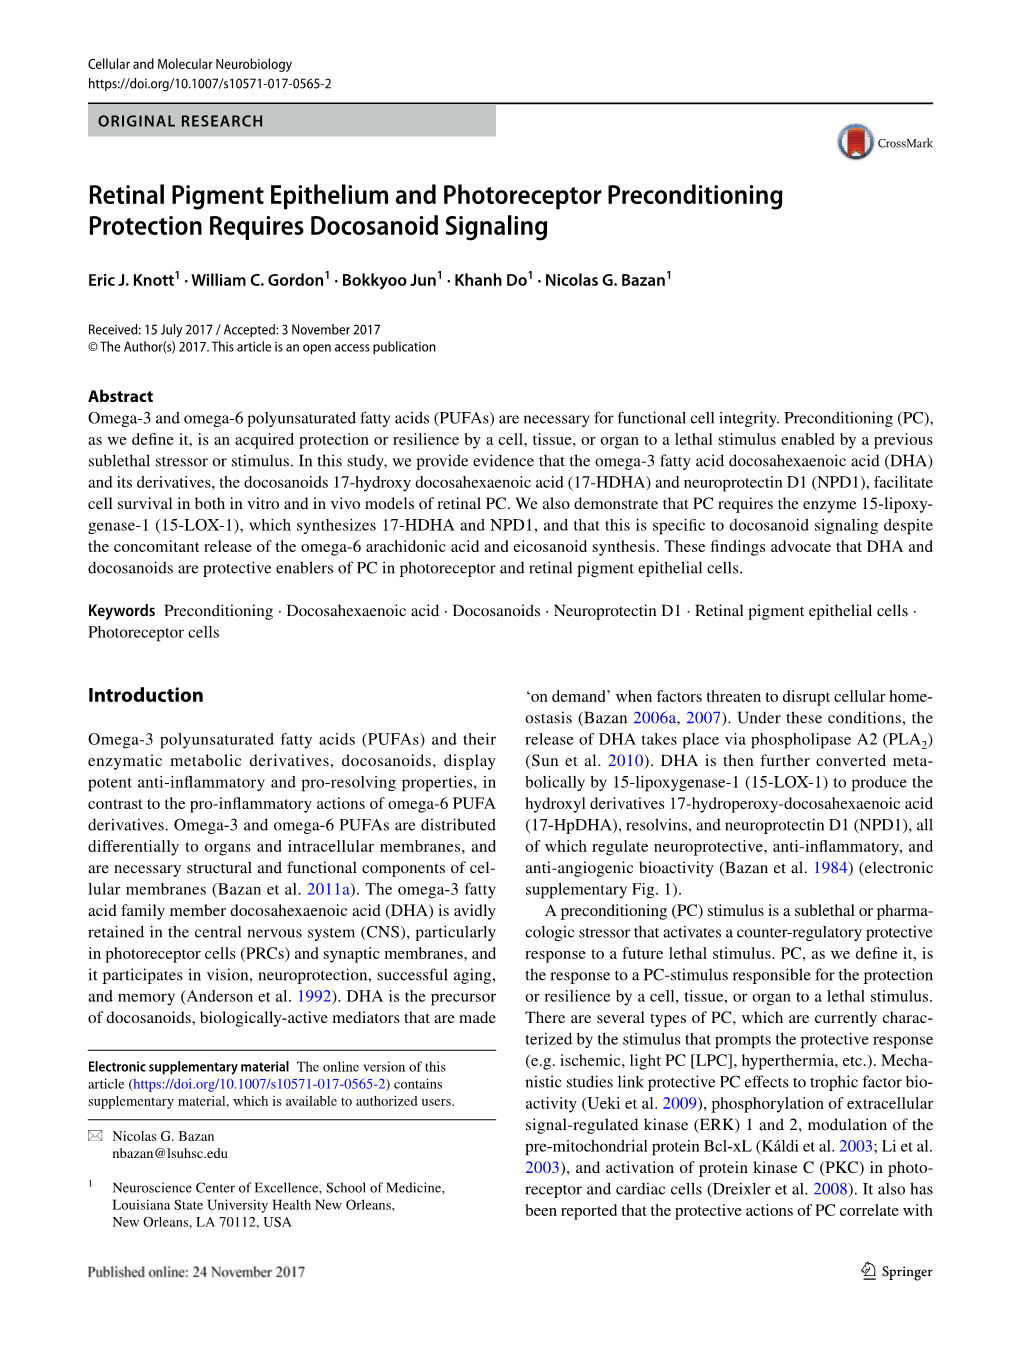 Retinal Pigment Epithelium and Photoreceptor Preconditioning Protection Requires Docosanoid Signaling